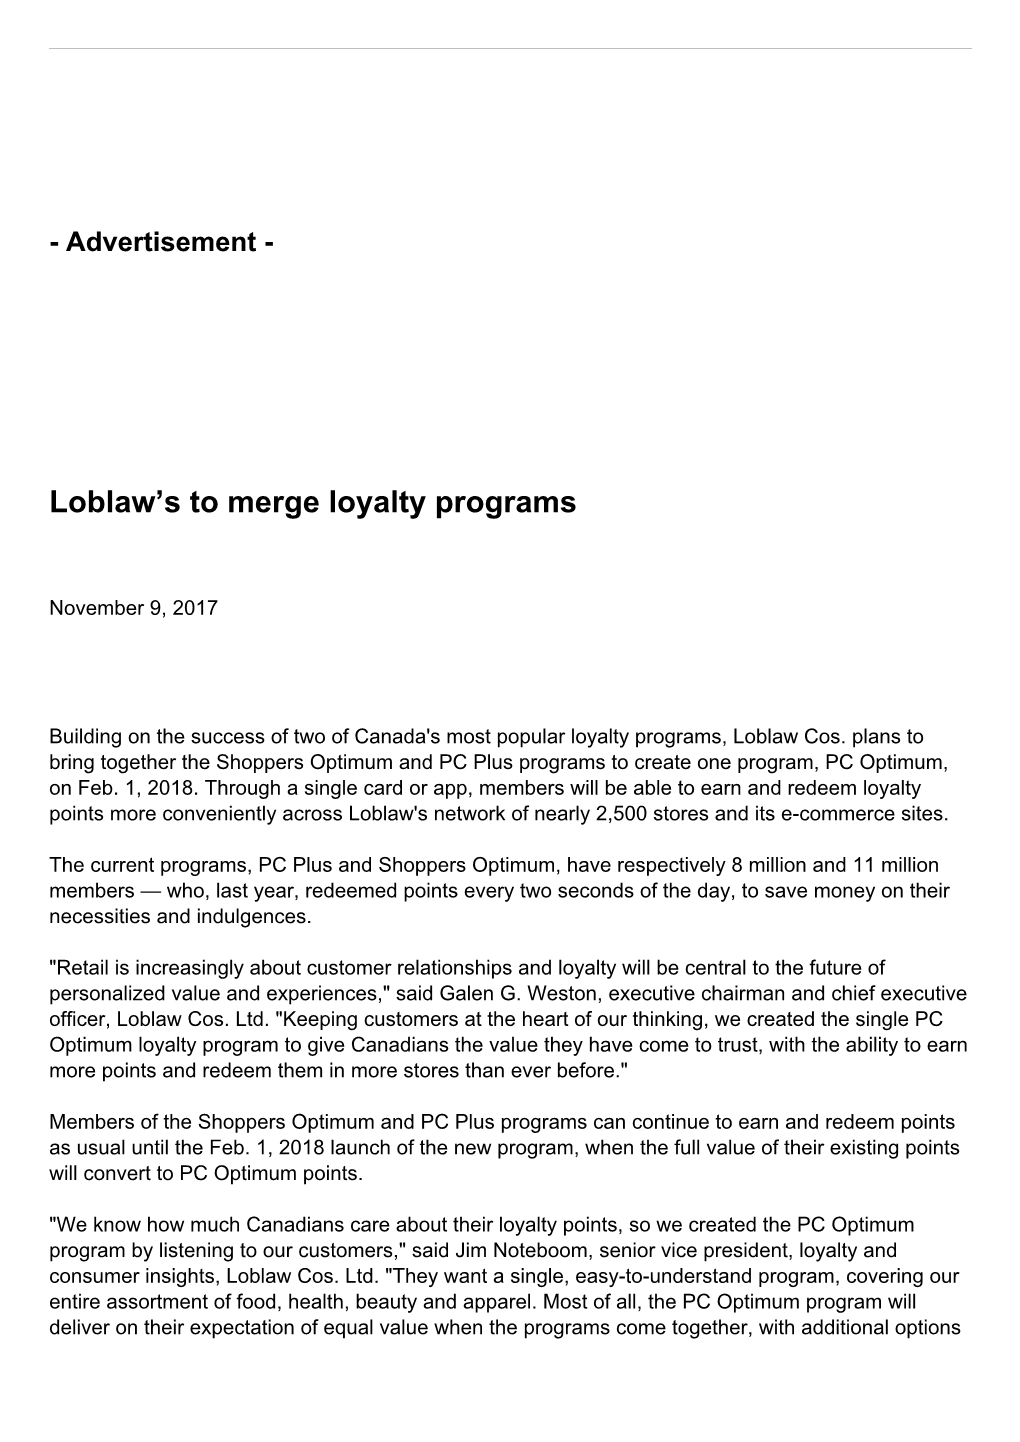 Loblaw's to Merge Loyalty Programs